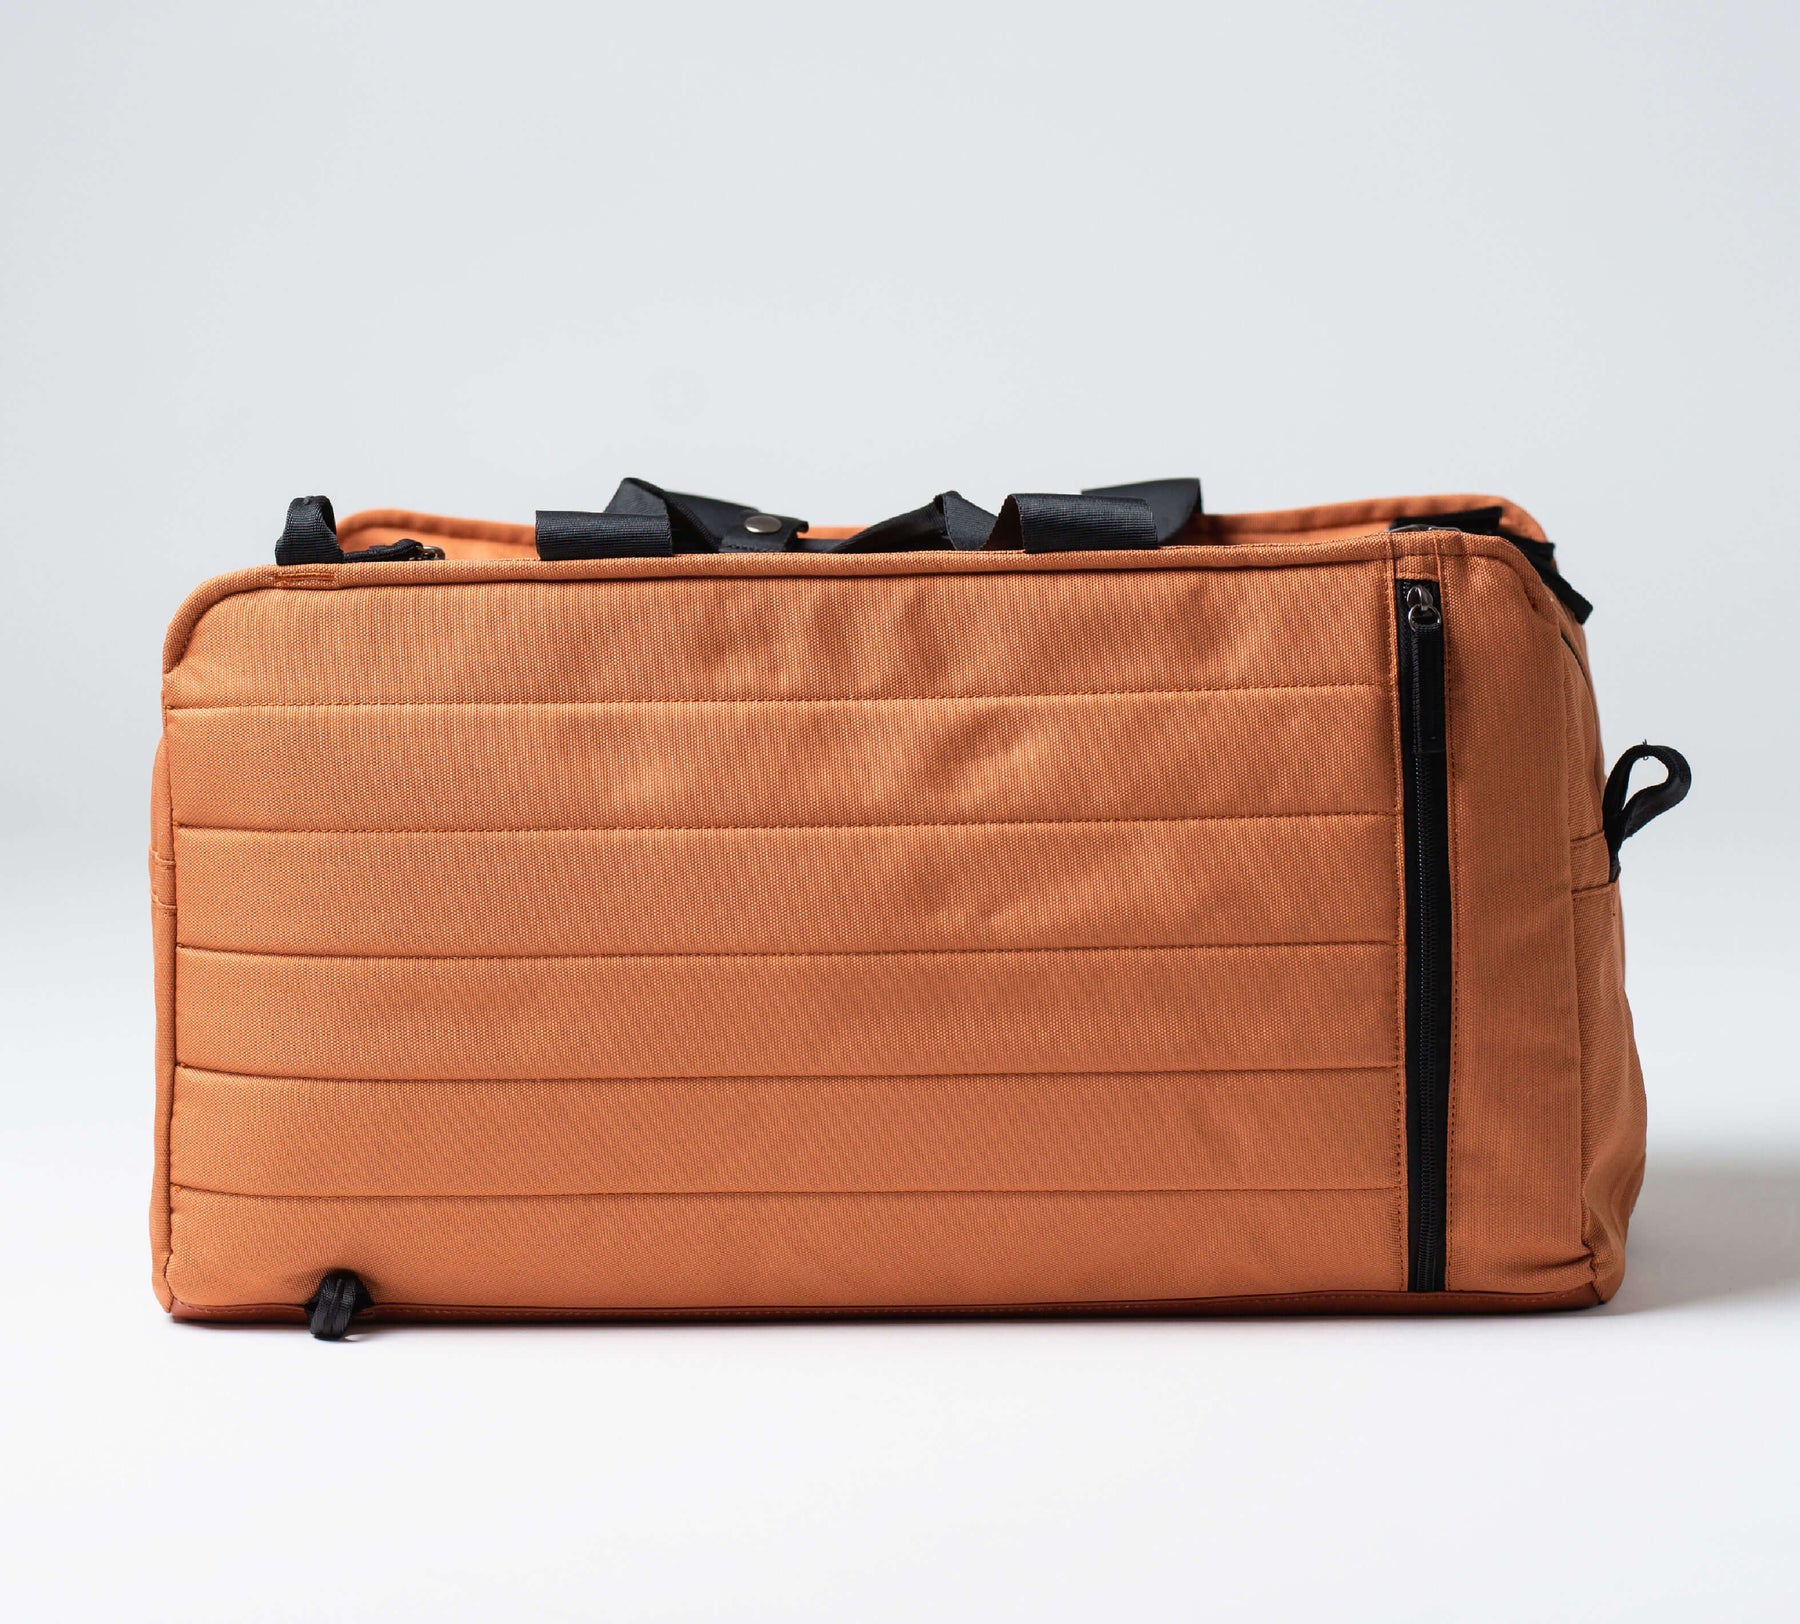 Laundry Bag 46×41 Cm Largecapacity Mesh Handbag With Handle